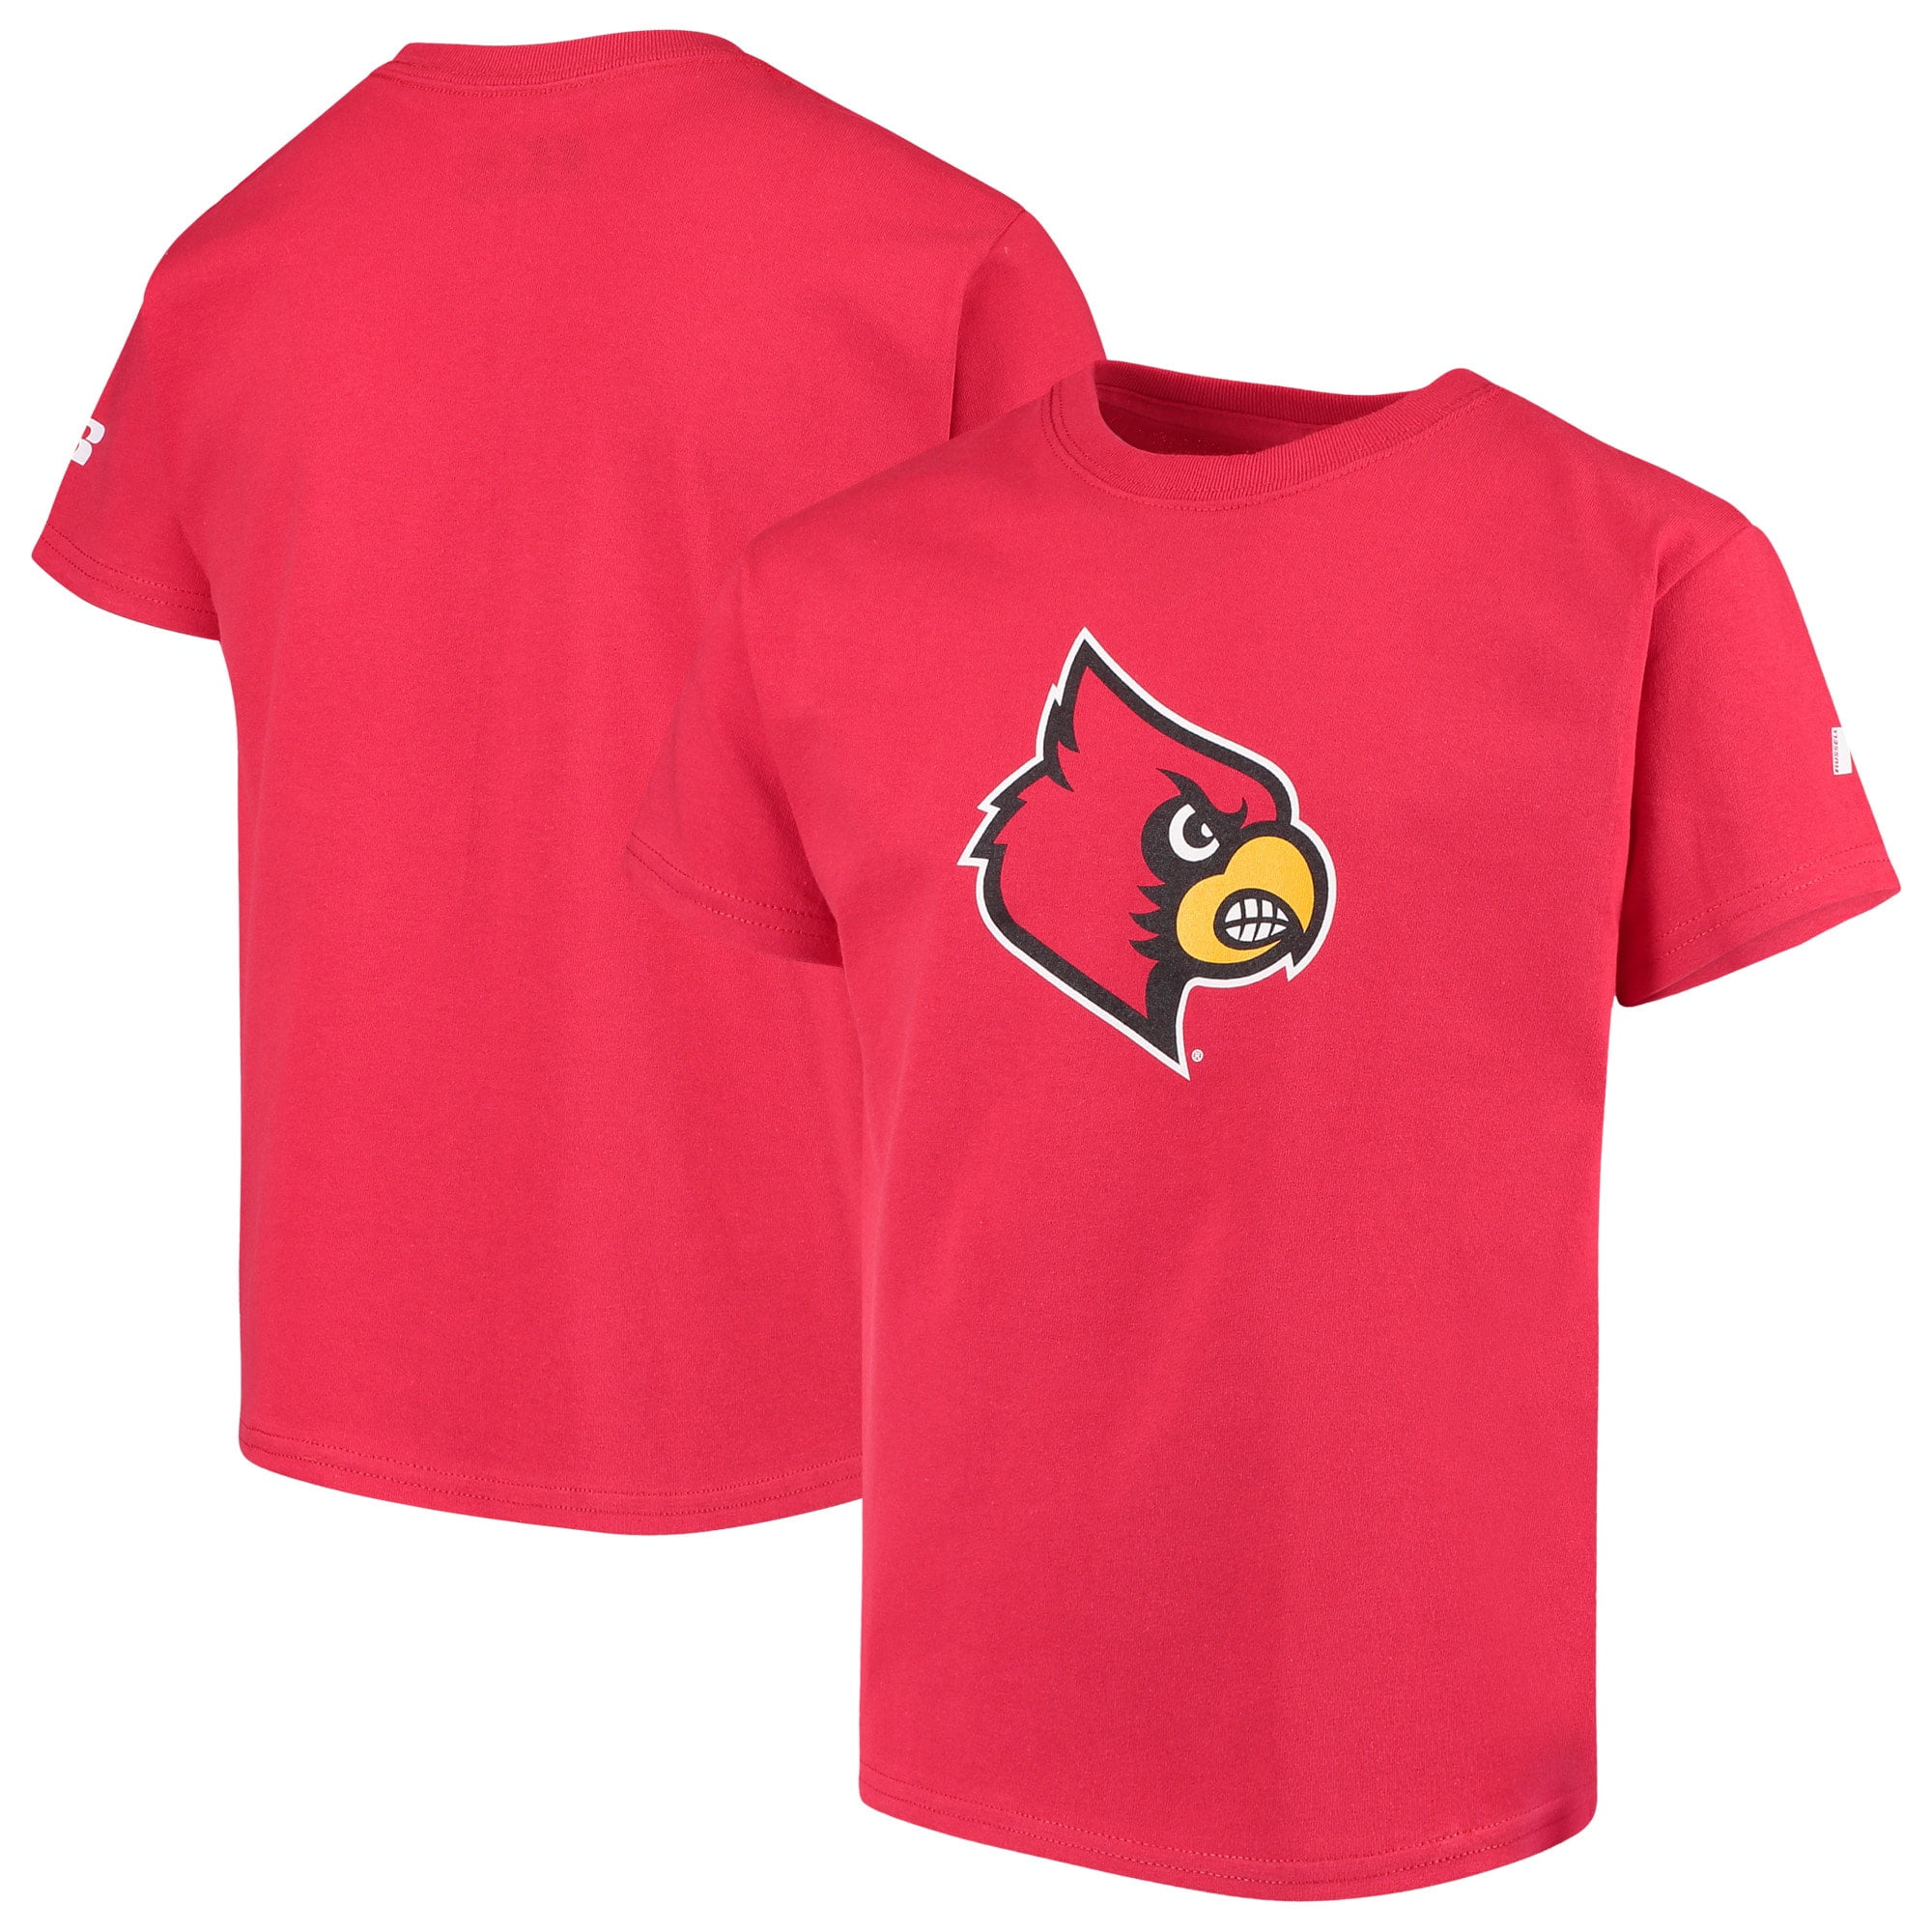 Fanatics Branded Men's Louisville Cardinals Campus T-Shirt